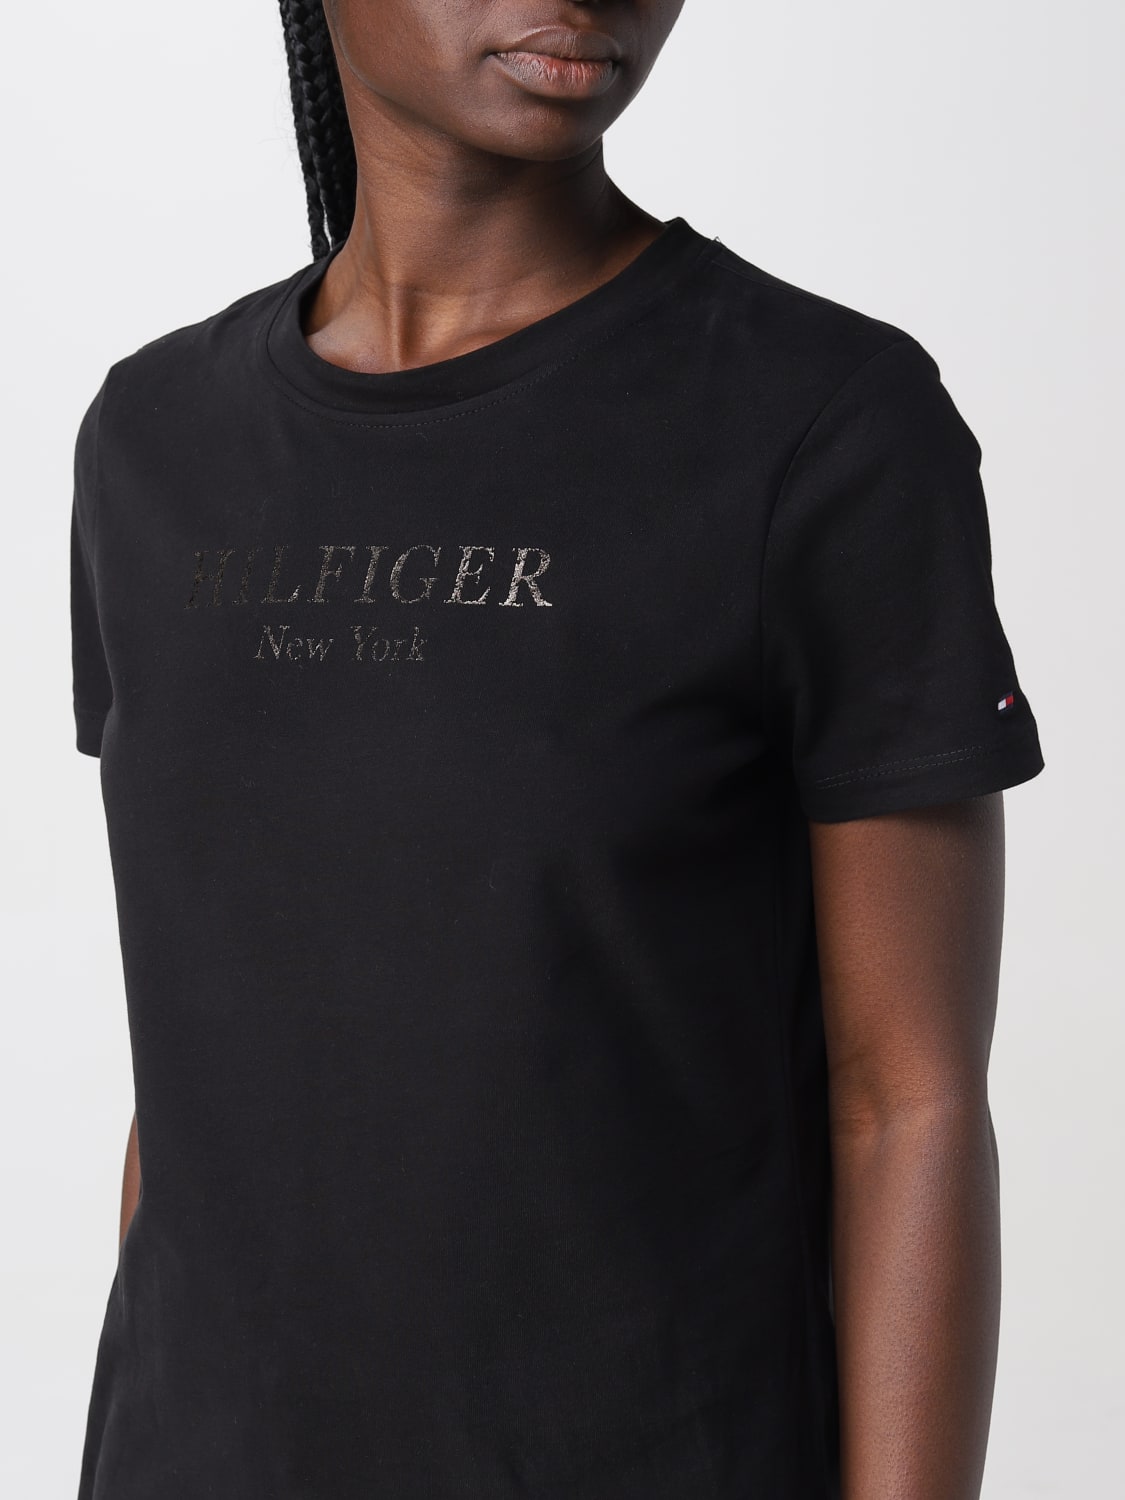 HILFIGER: for woman Black | Tommy Hilfiger t-shirt WW0WW37194 online on GIGLIO.COM